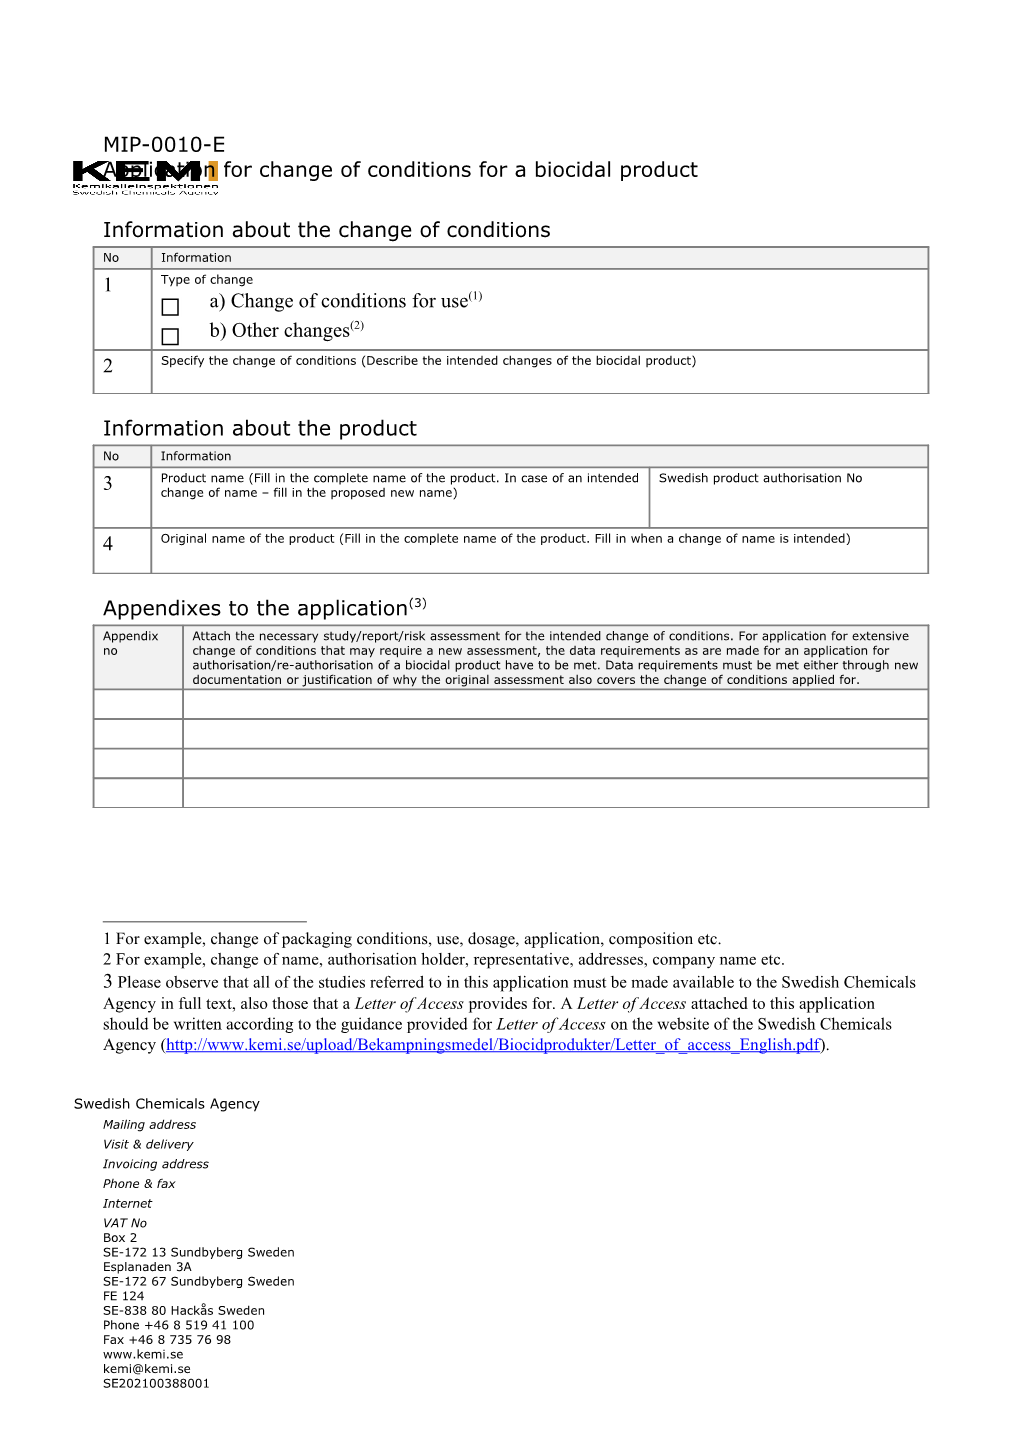 MIP-0010-E Application Form